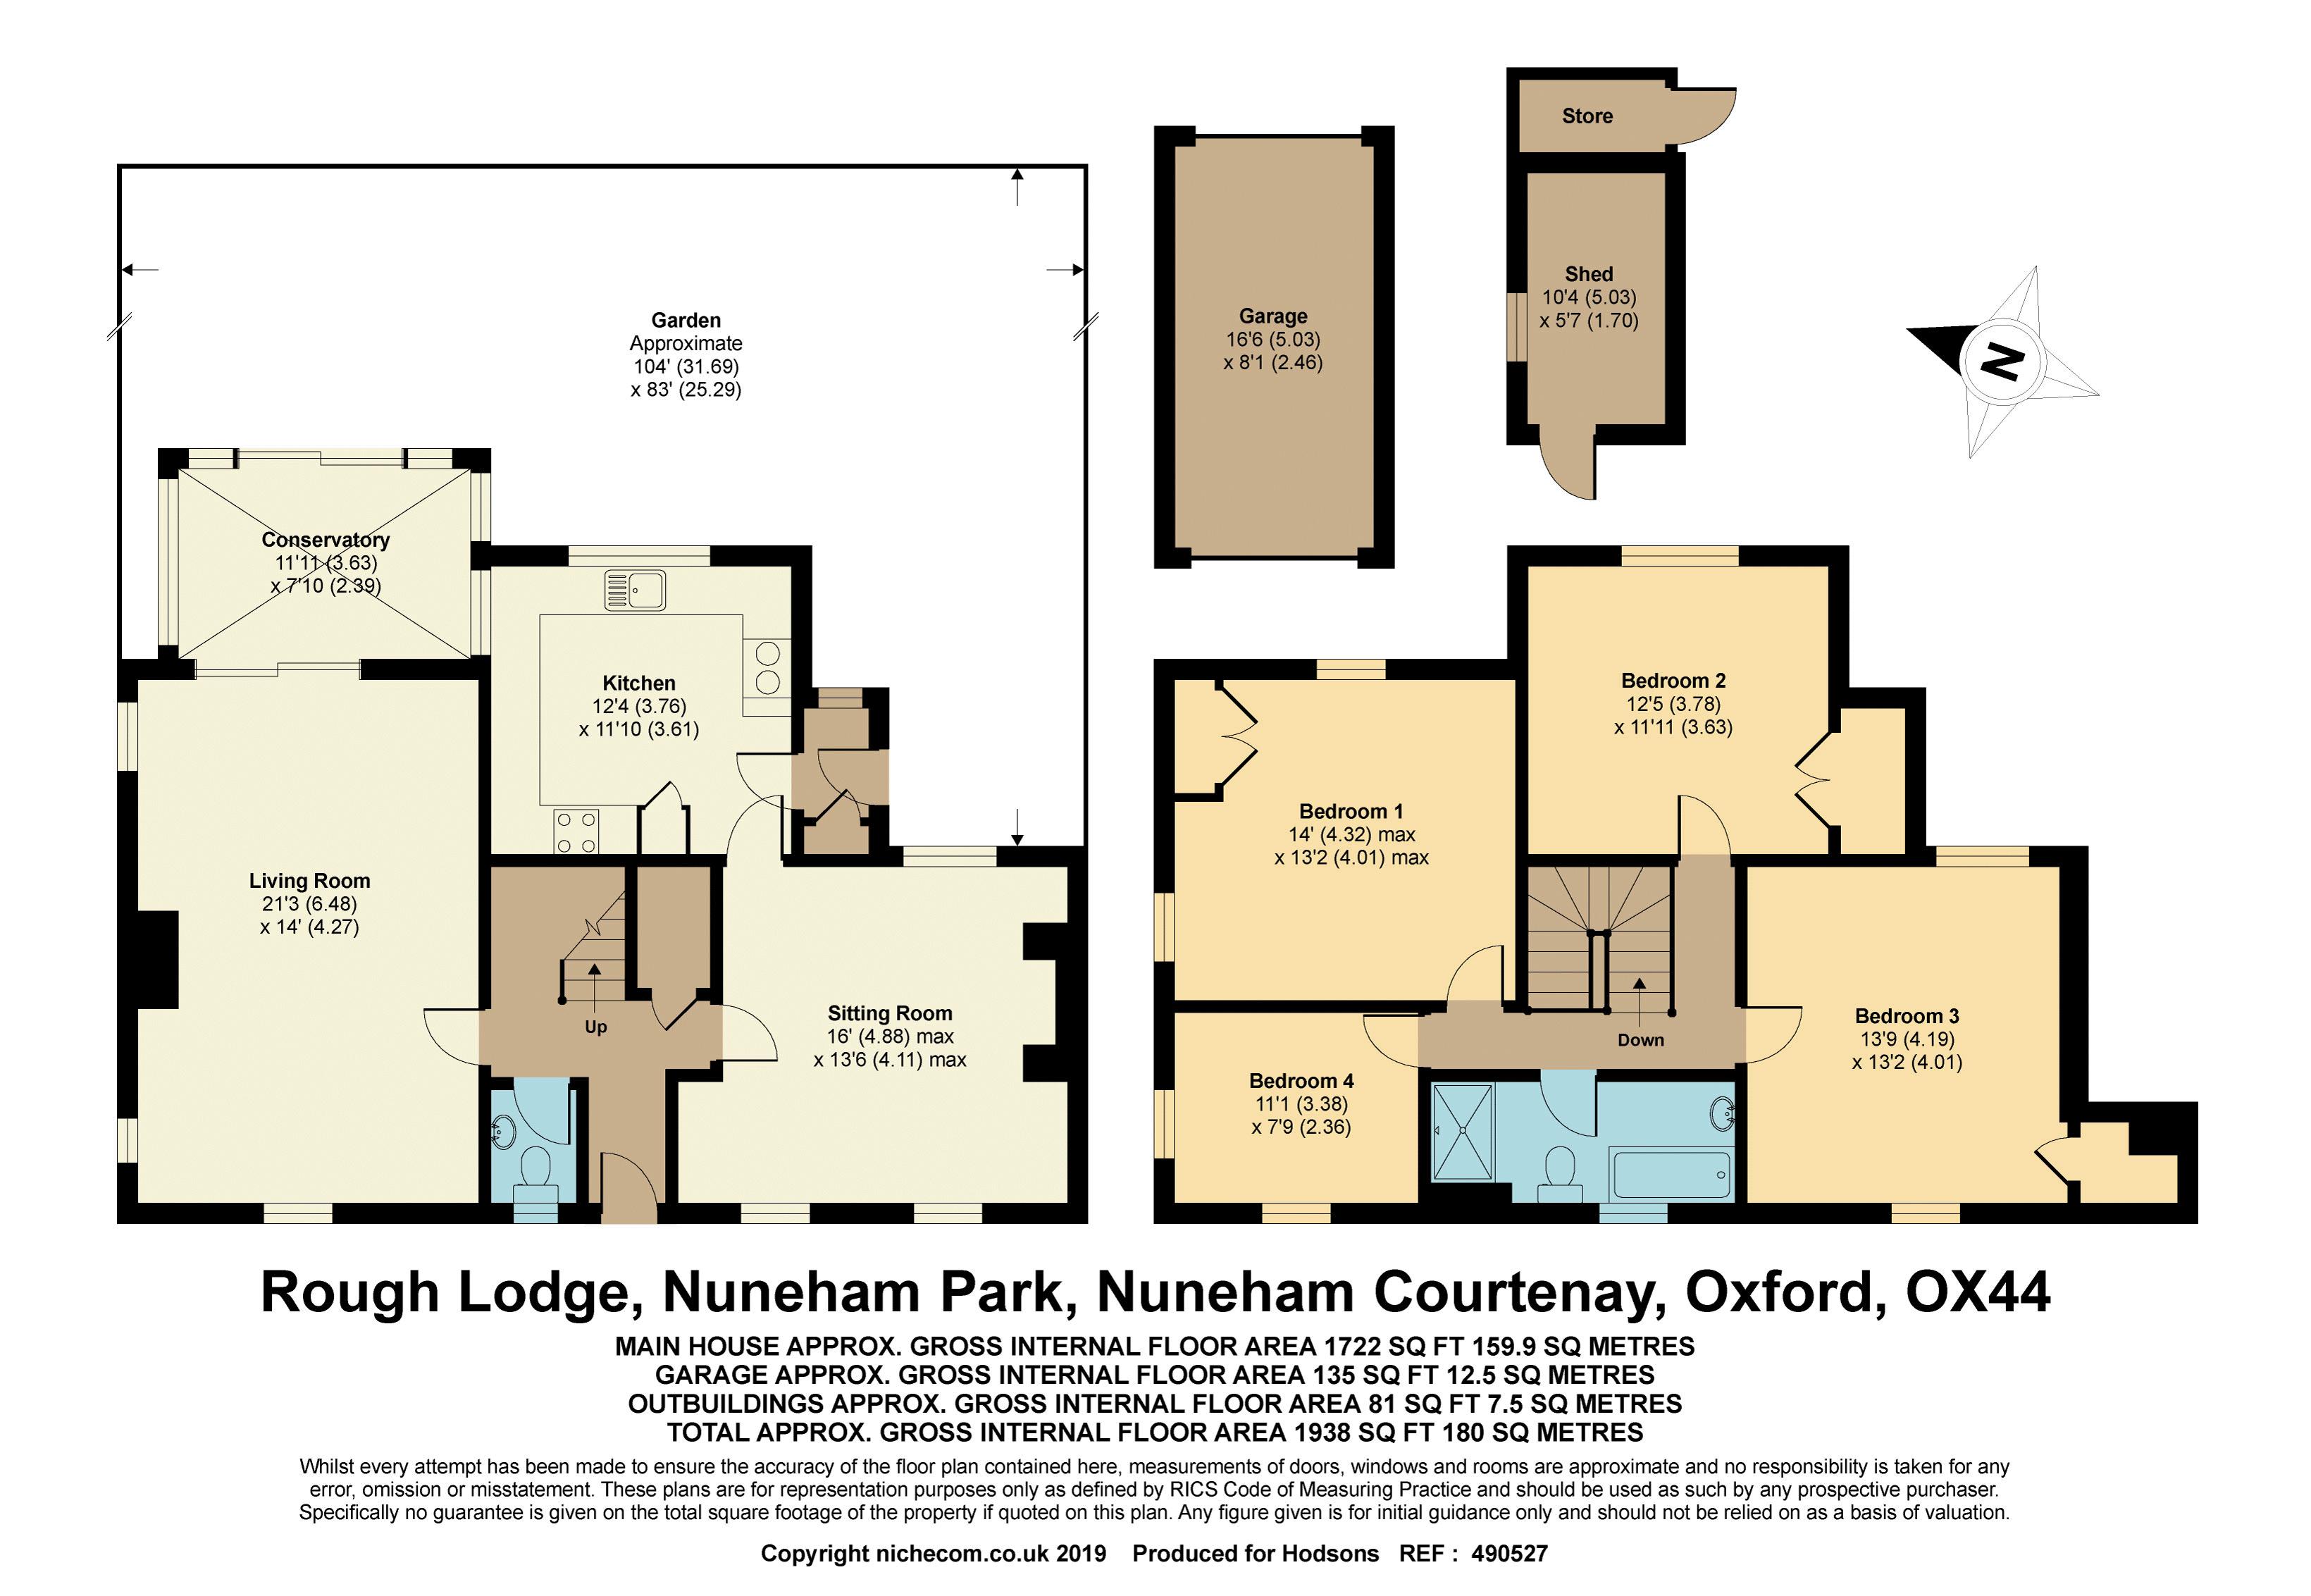 4 Bedrooms Semi-detached house for sale in Nuneham Park, Nuneham Courtenay, Oxford OX44